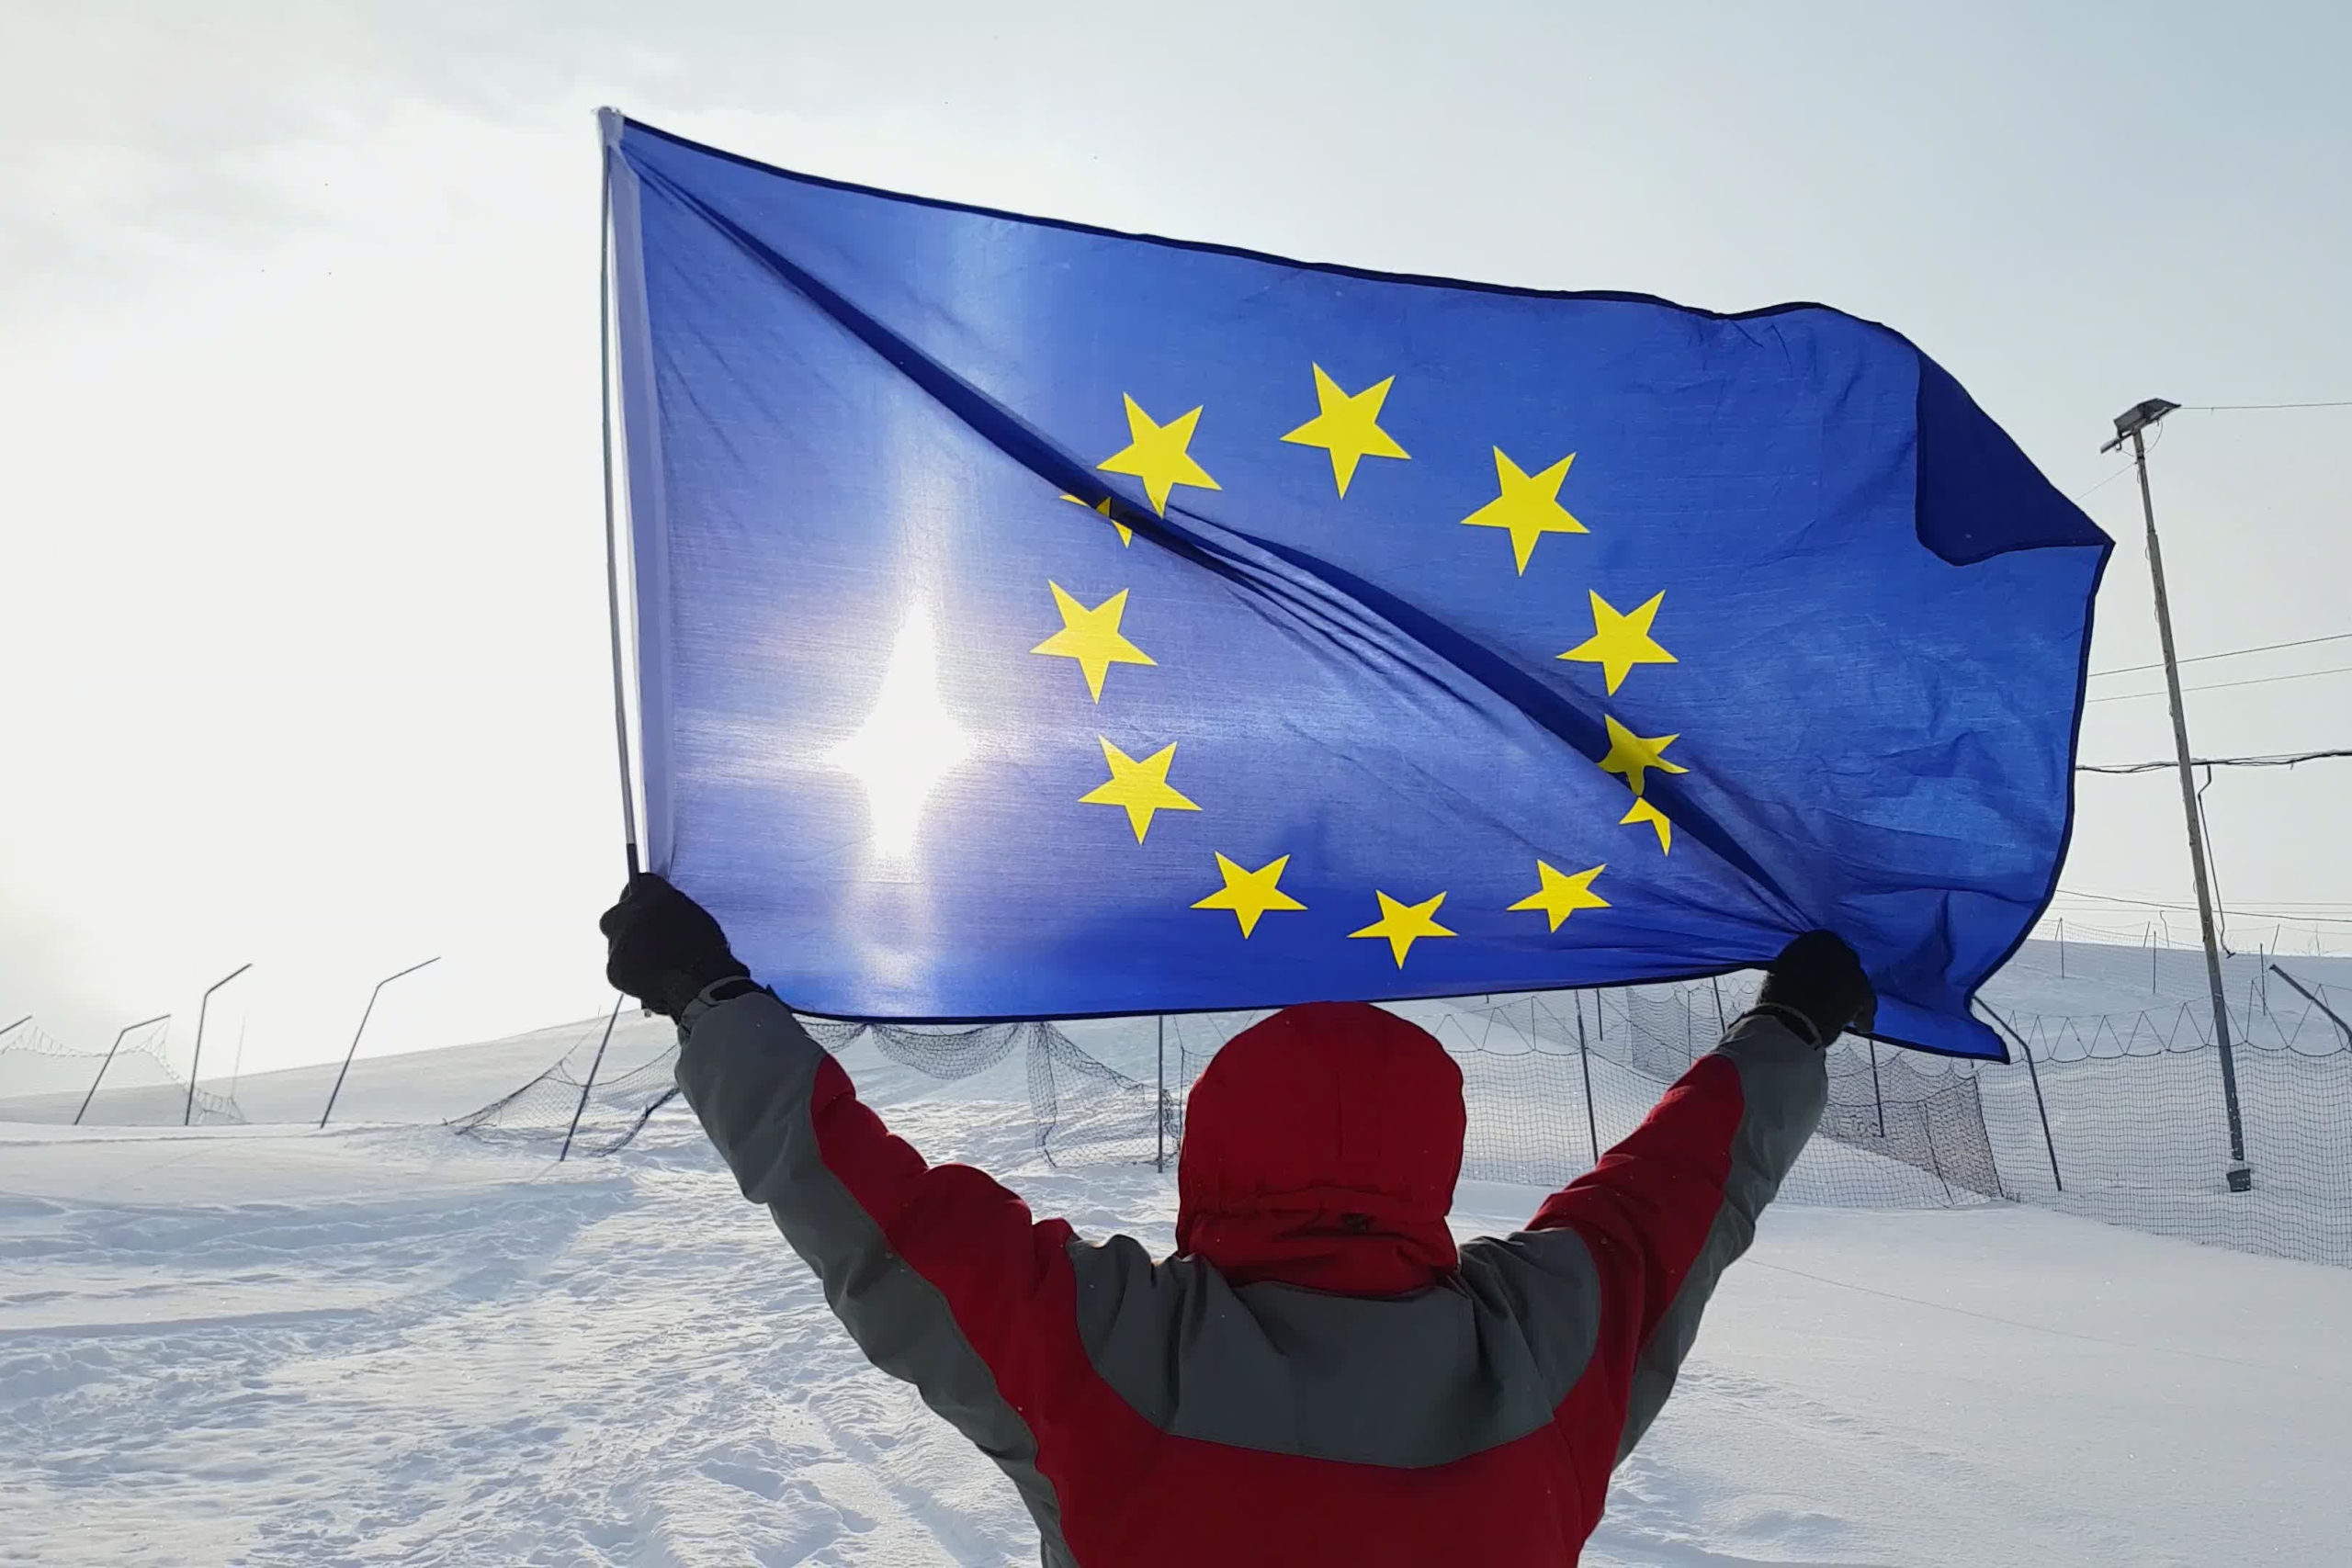 skiër houdt Europese vlag de lucht in